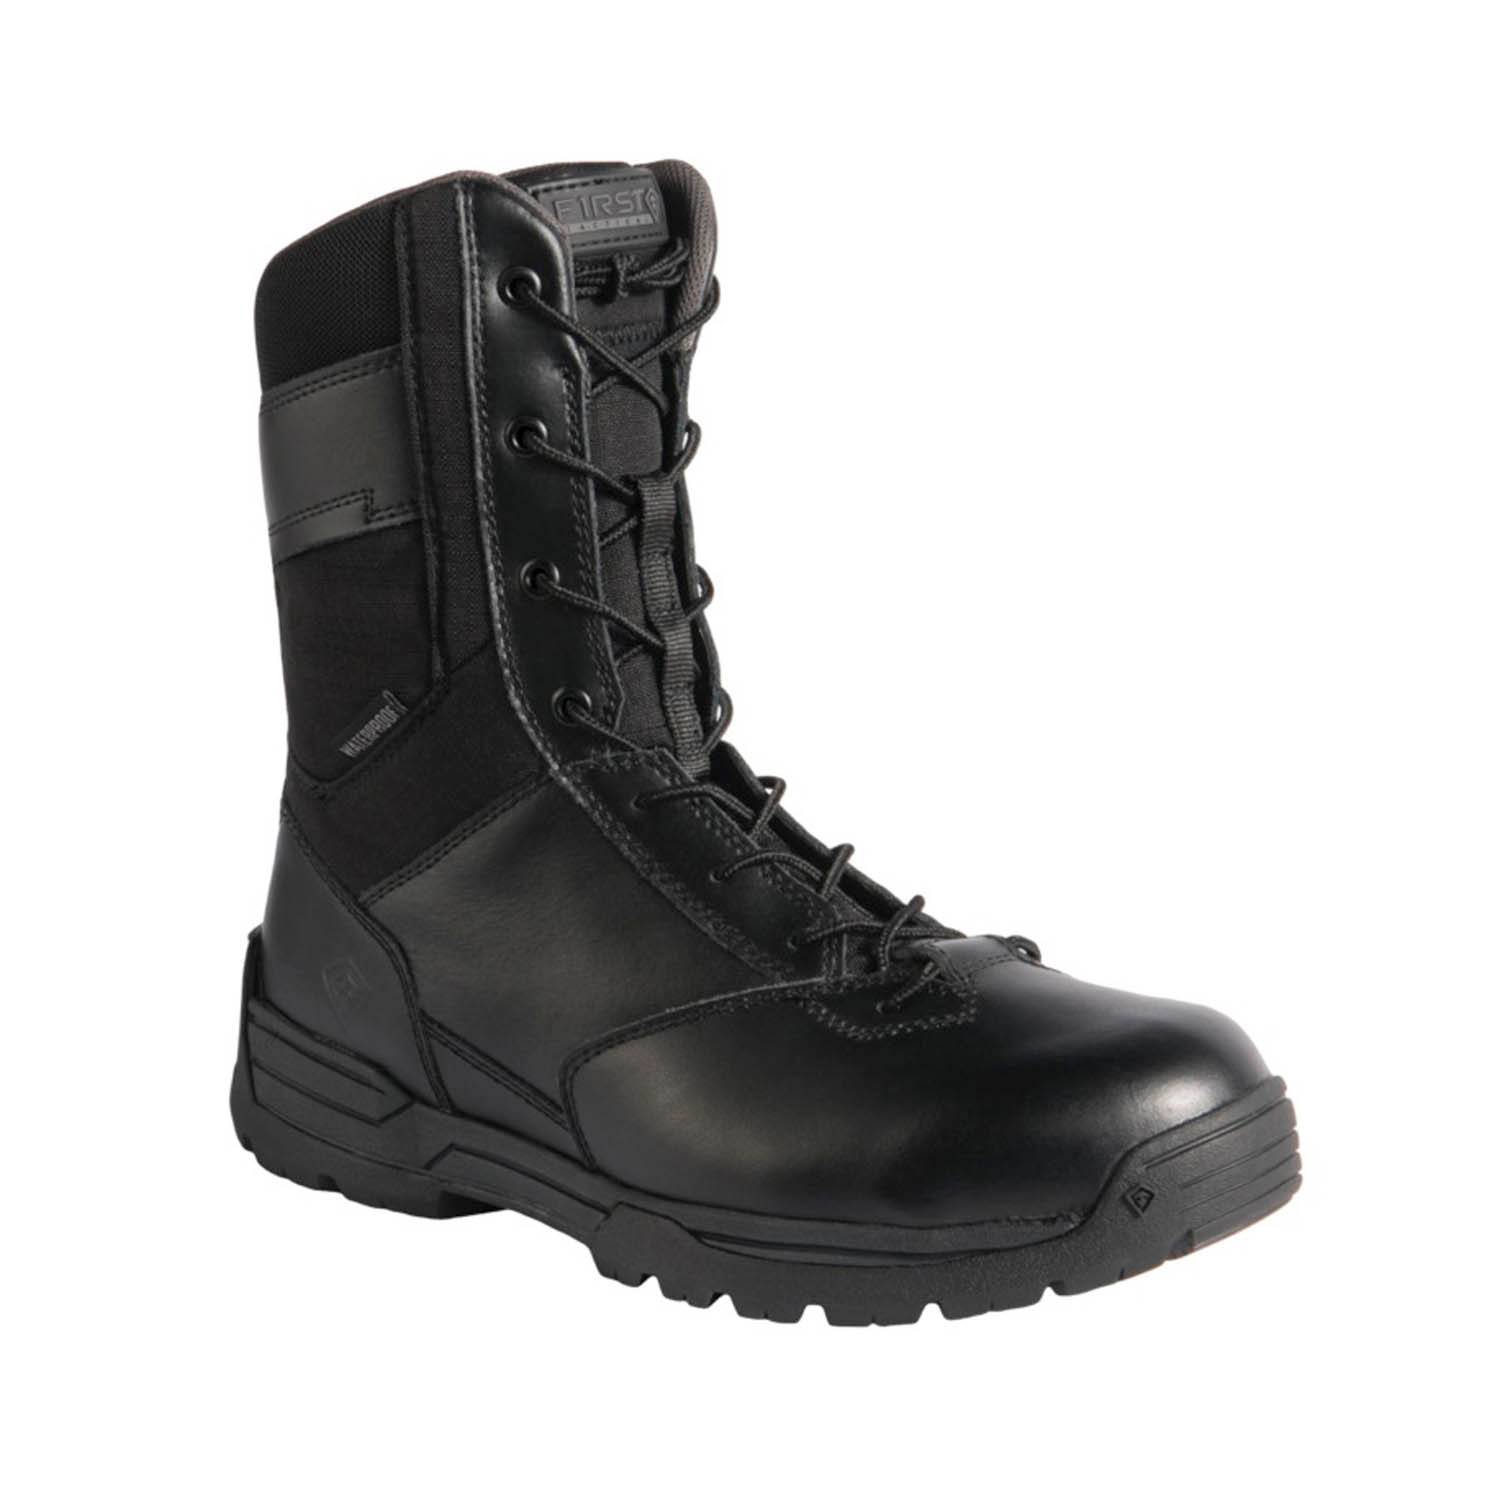 First Tactical Men's 8" Waterproof Side-Zip Duty Boots